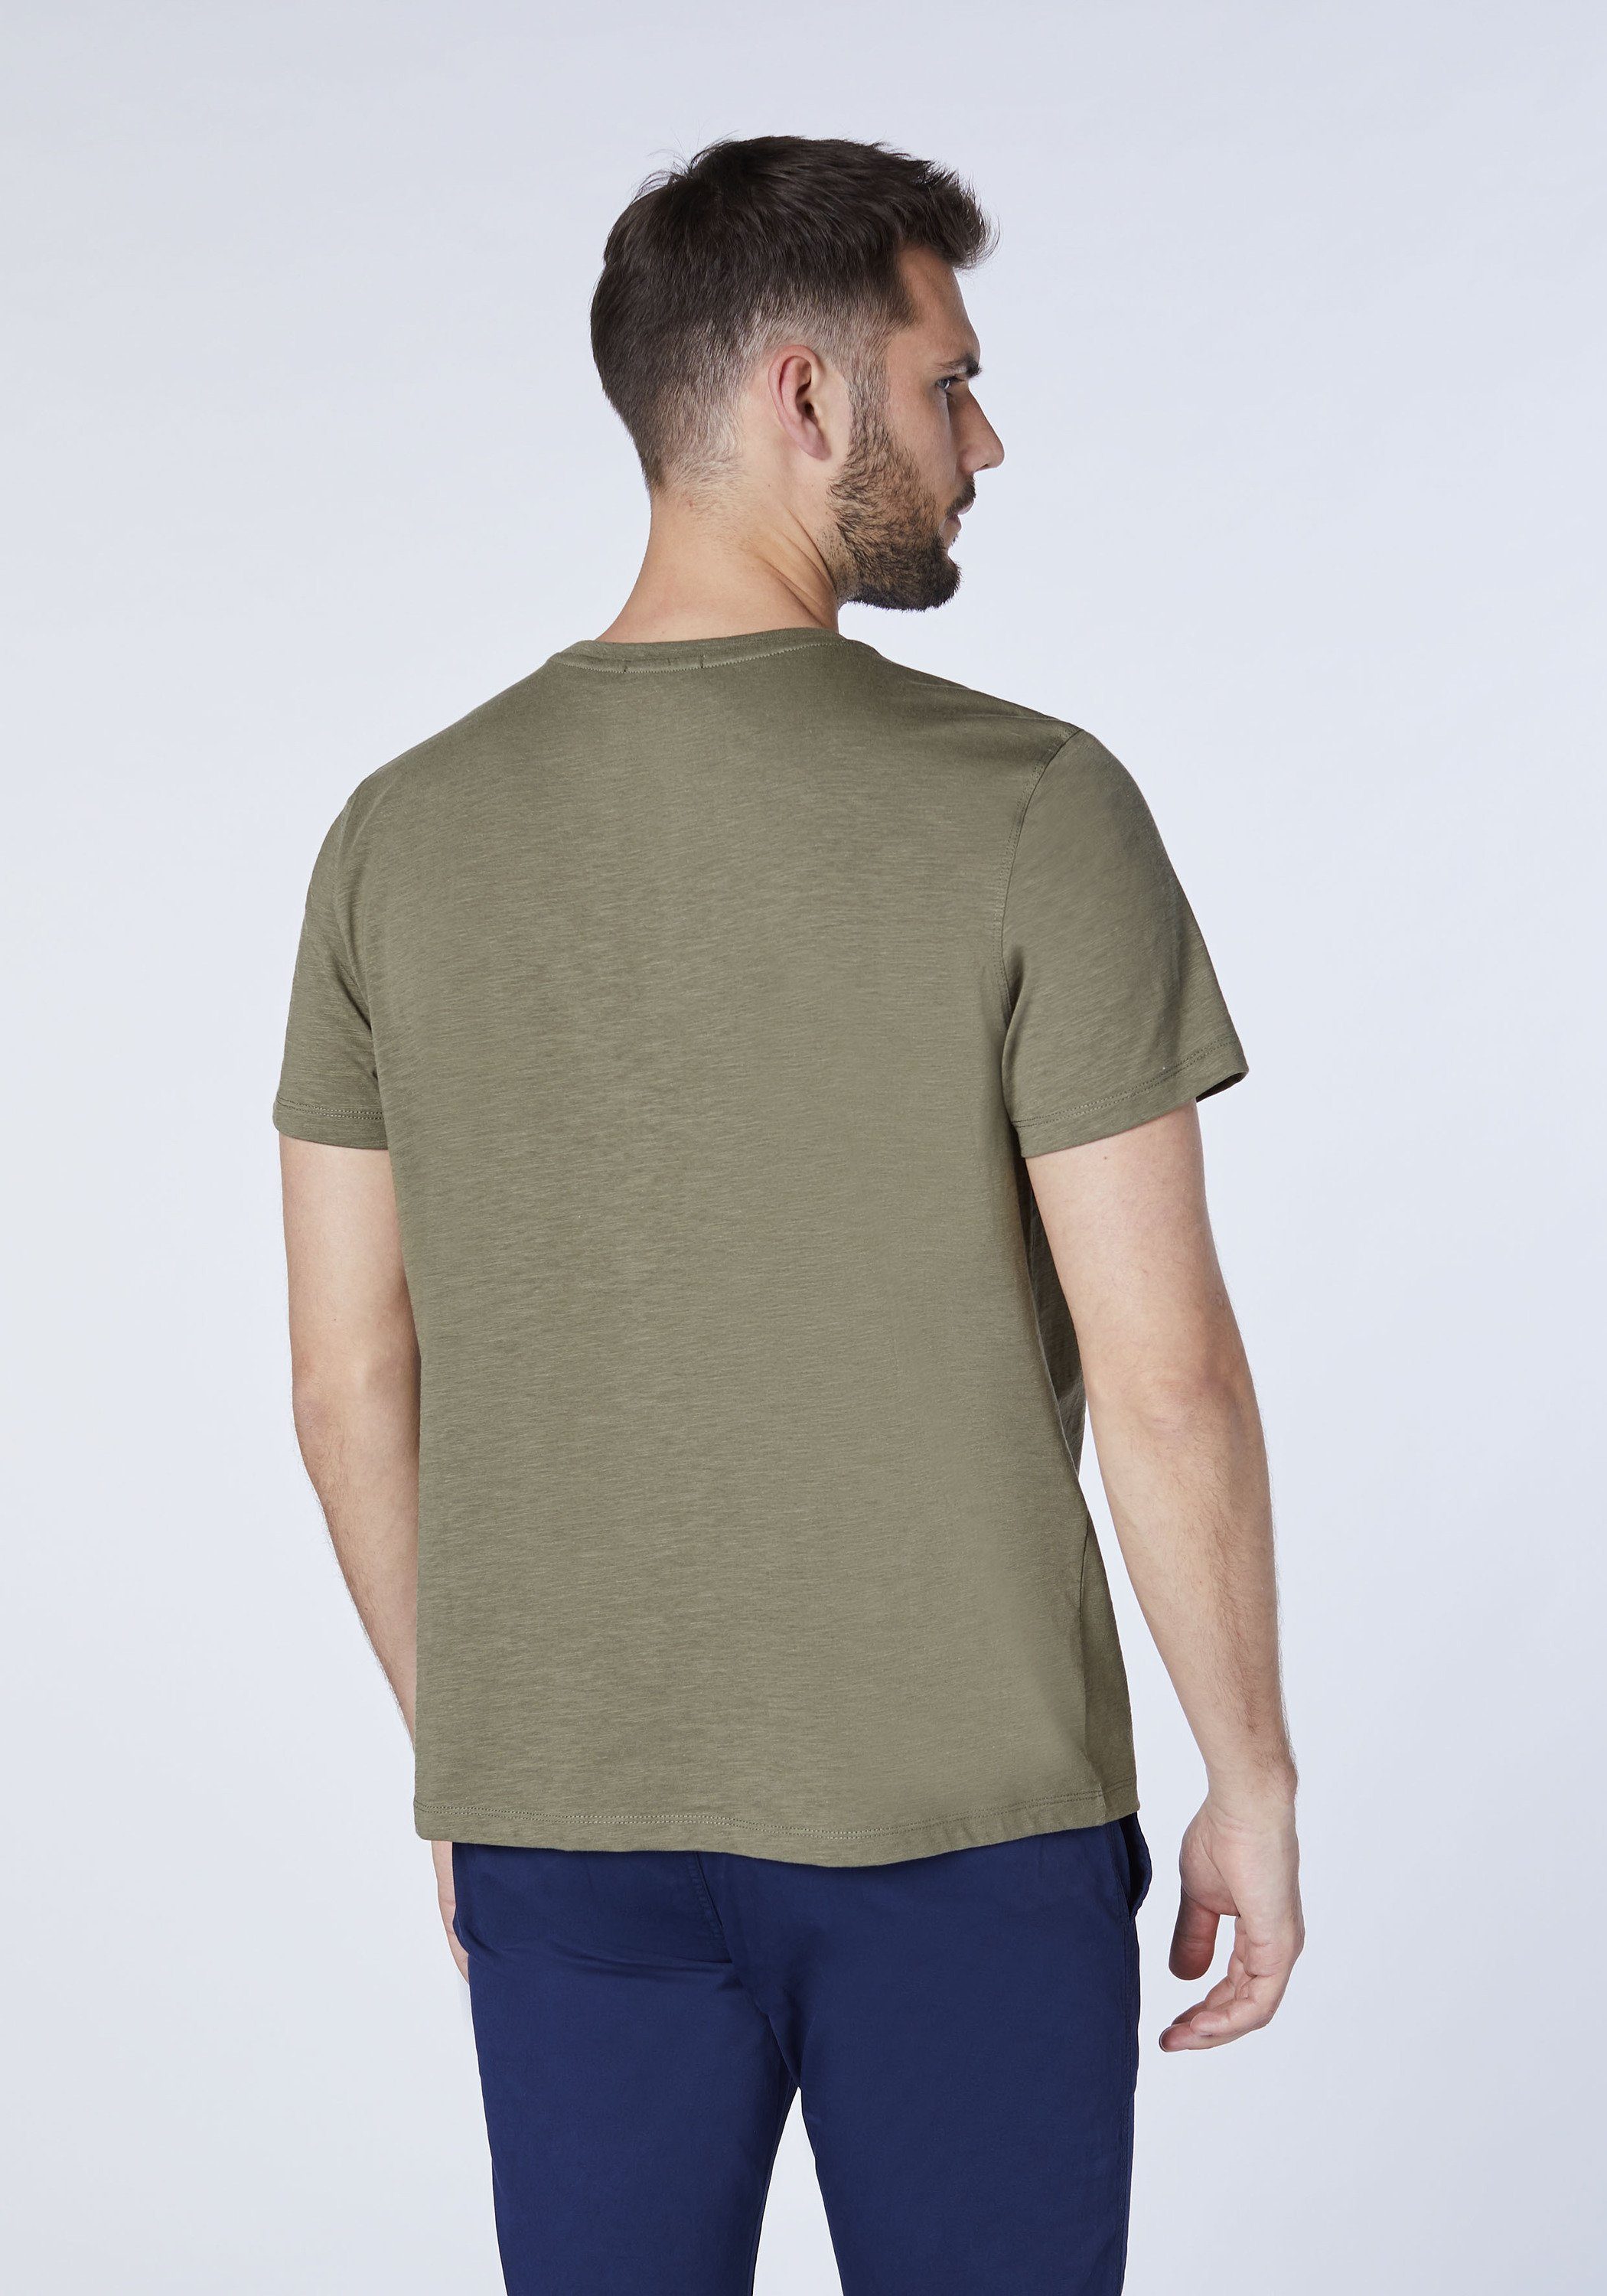 Label-Symbol mit 1 Dusty Chiemsee T-Shirt Olive Print-Shirt gedrucktem